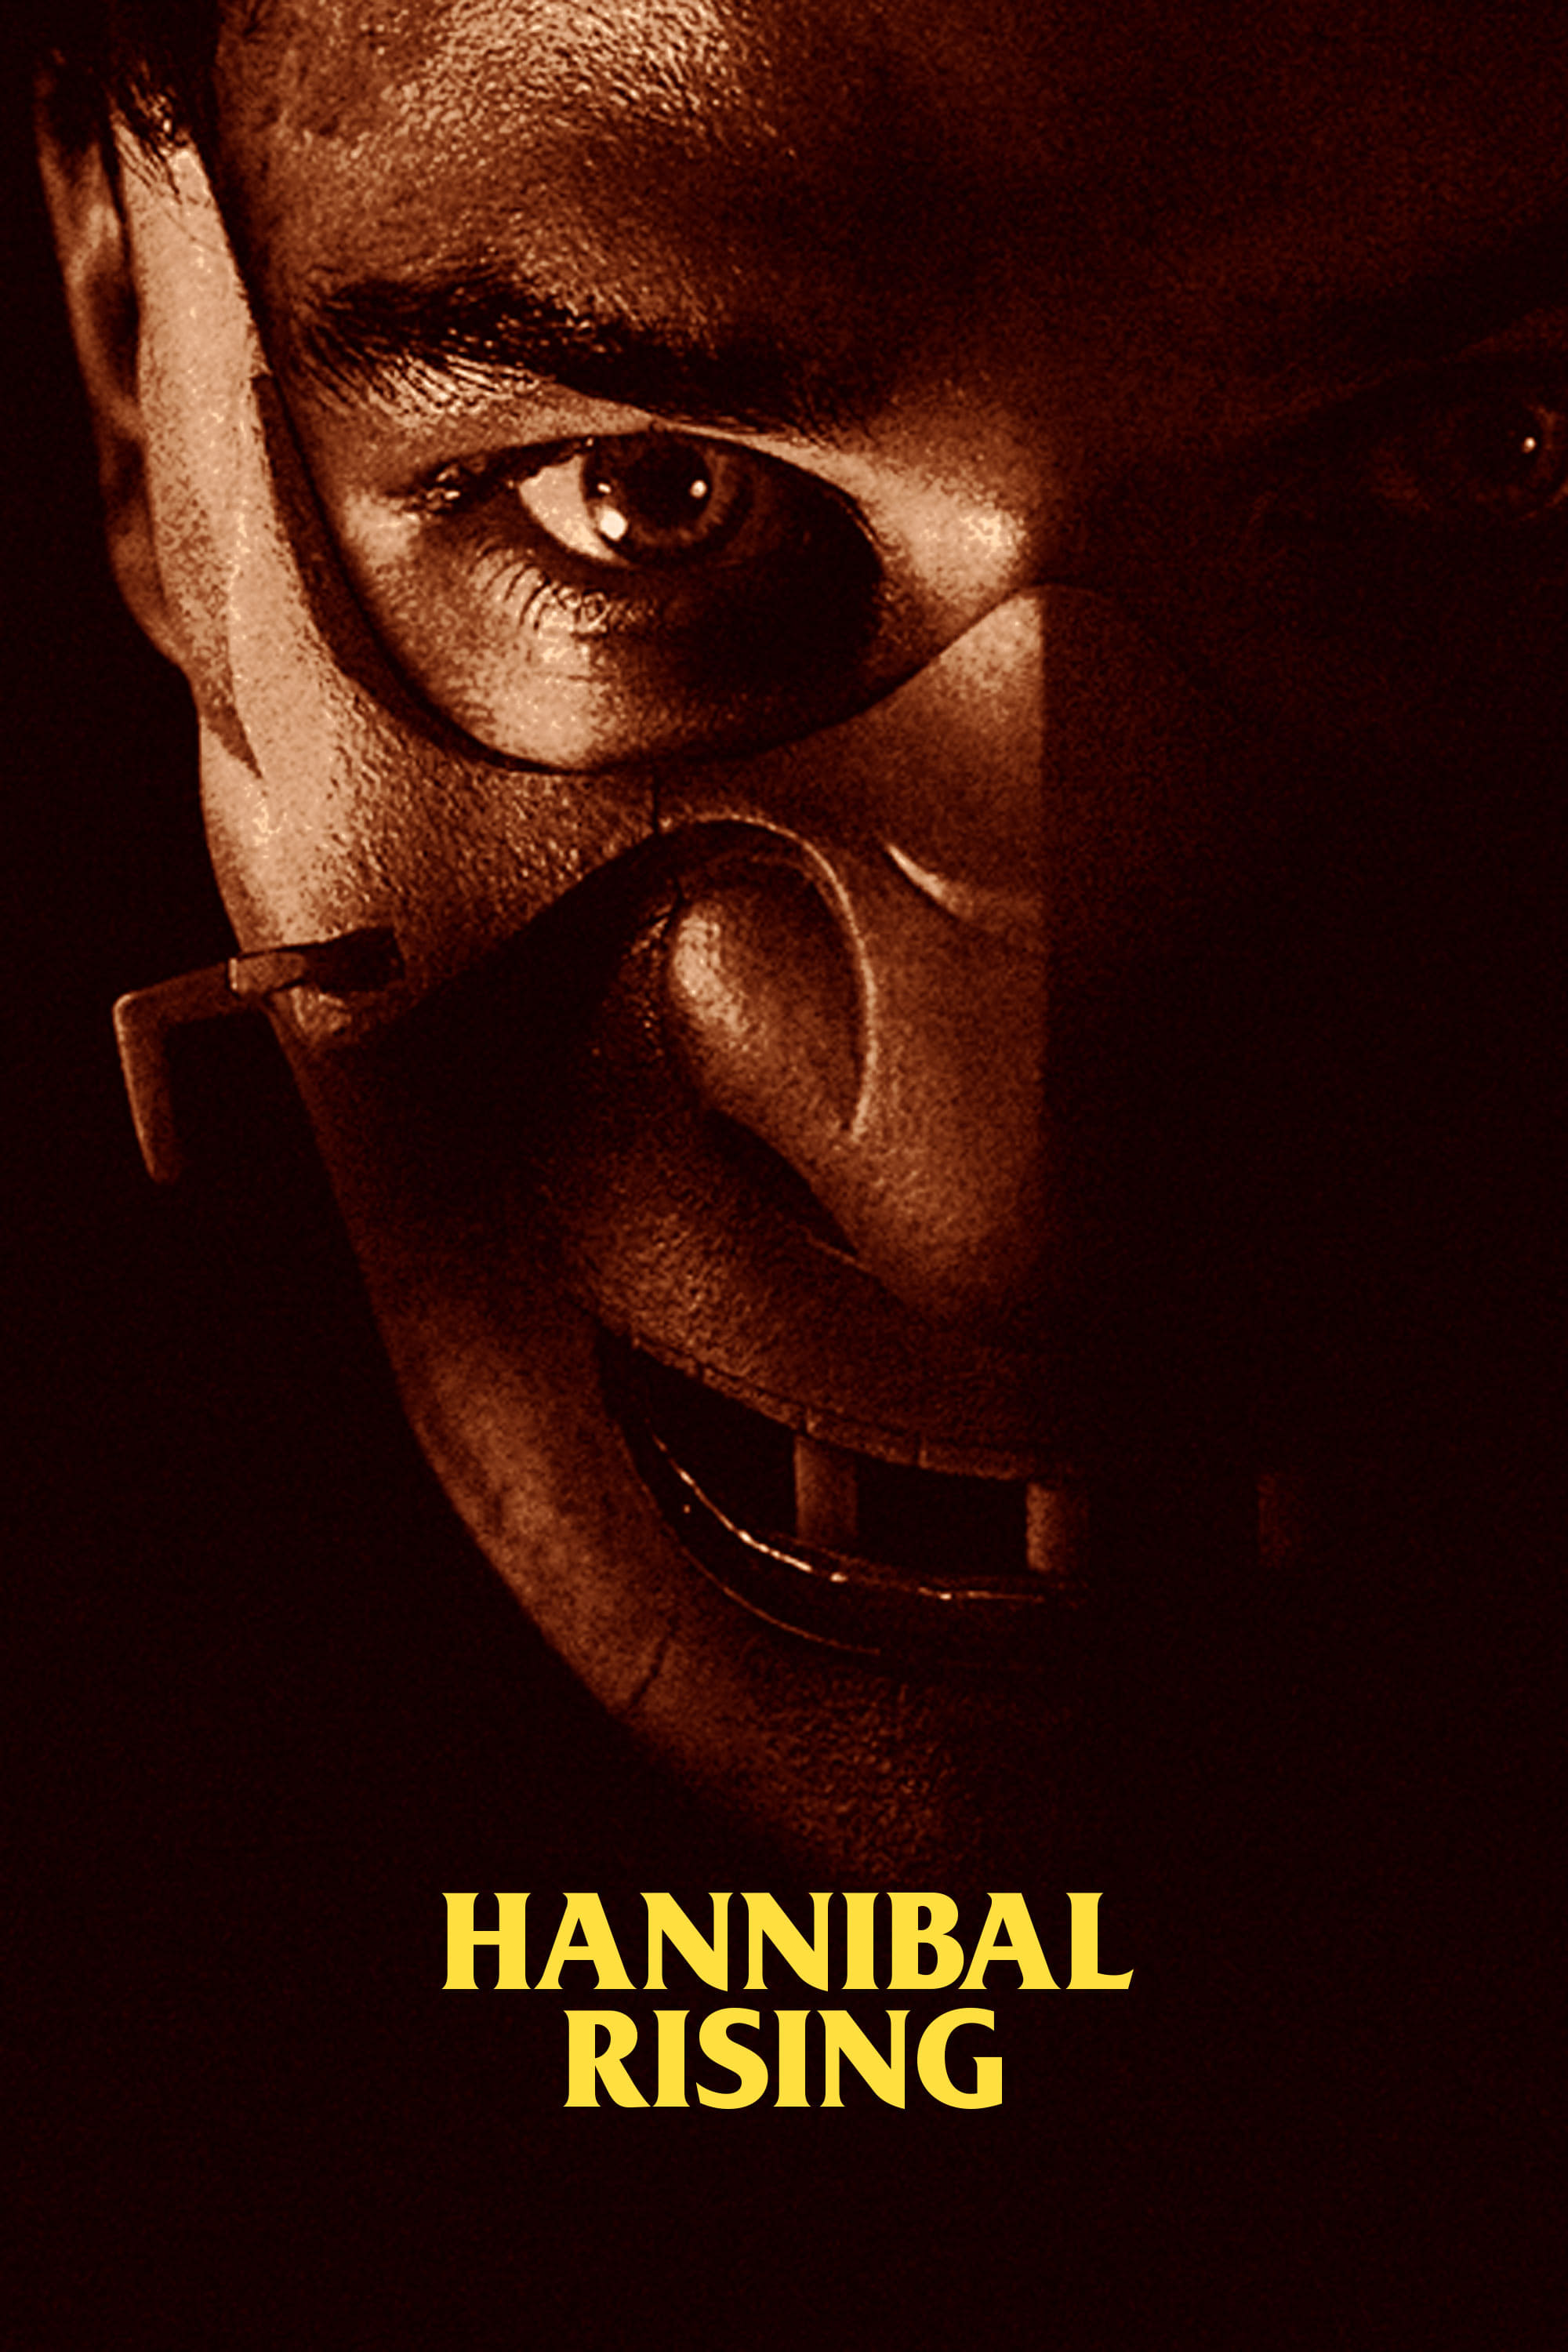 Hannibal, a Origem do Mal (2007)